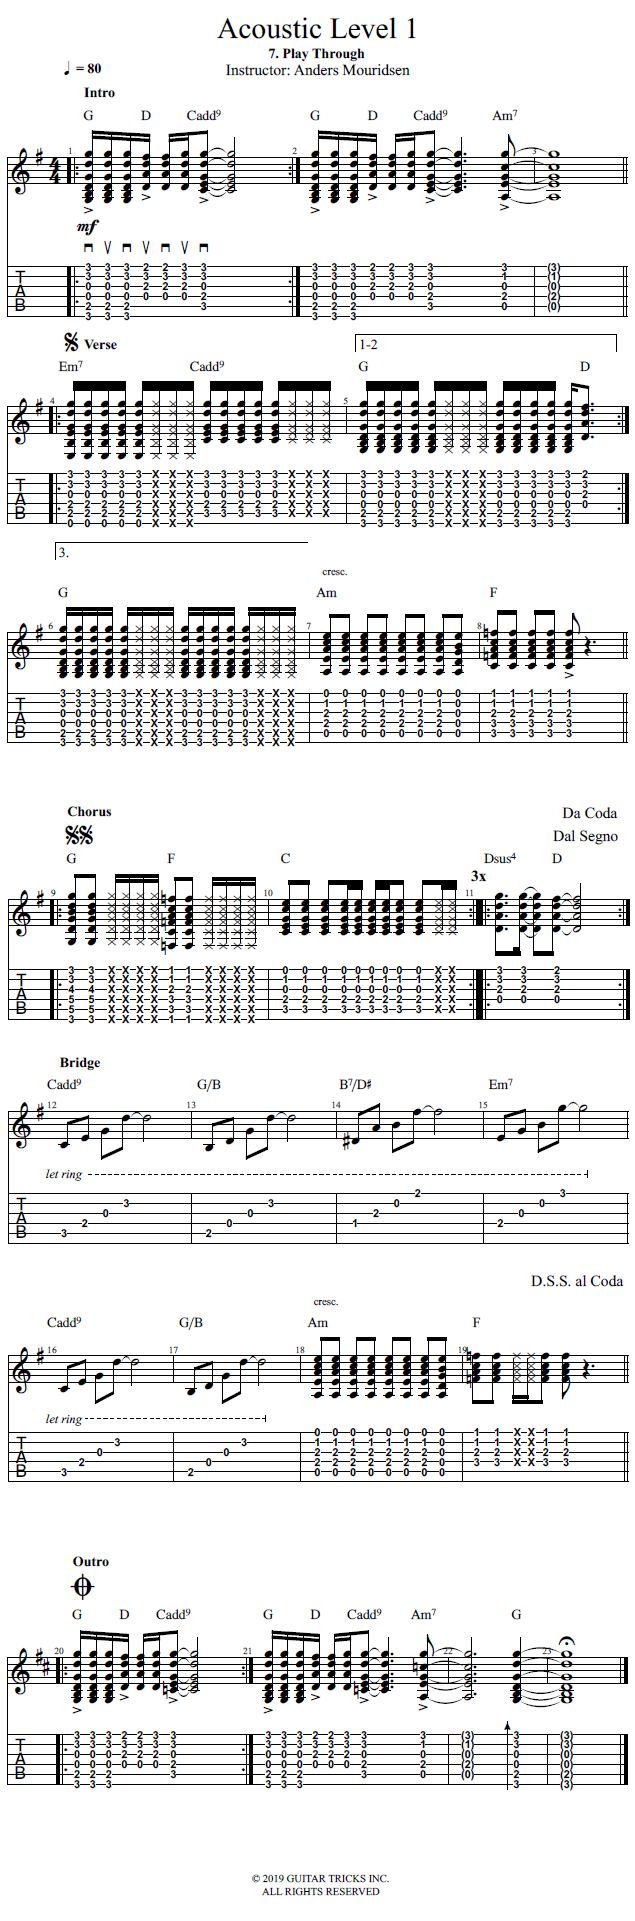 Play Through song notation